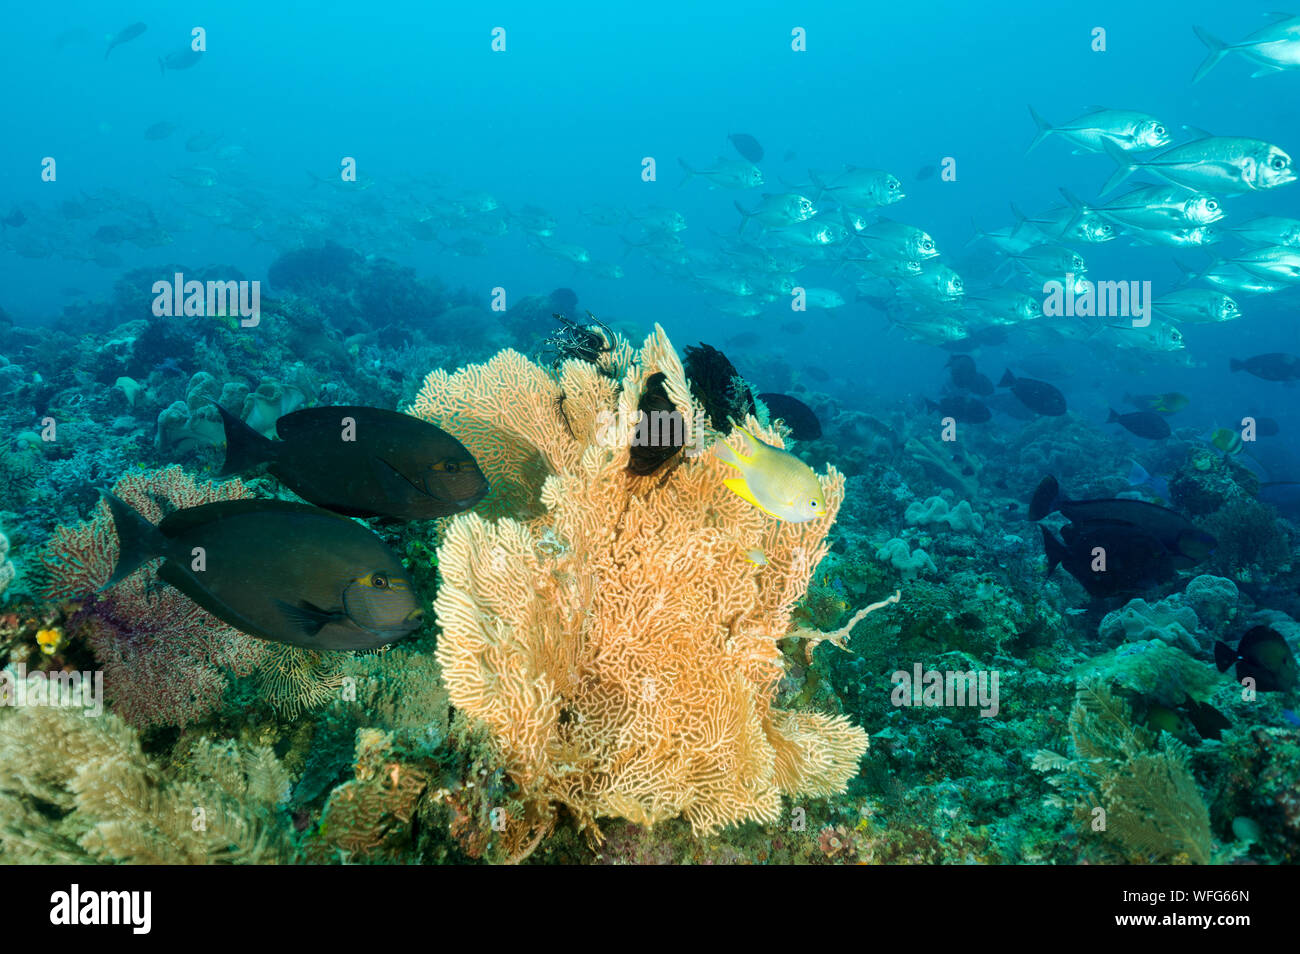 Reef scenic with fish schools Raja Ampat Indonesia. Stock Photo